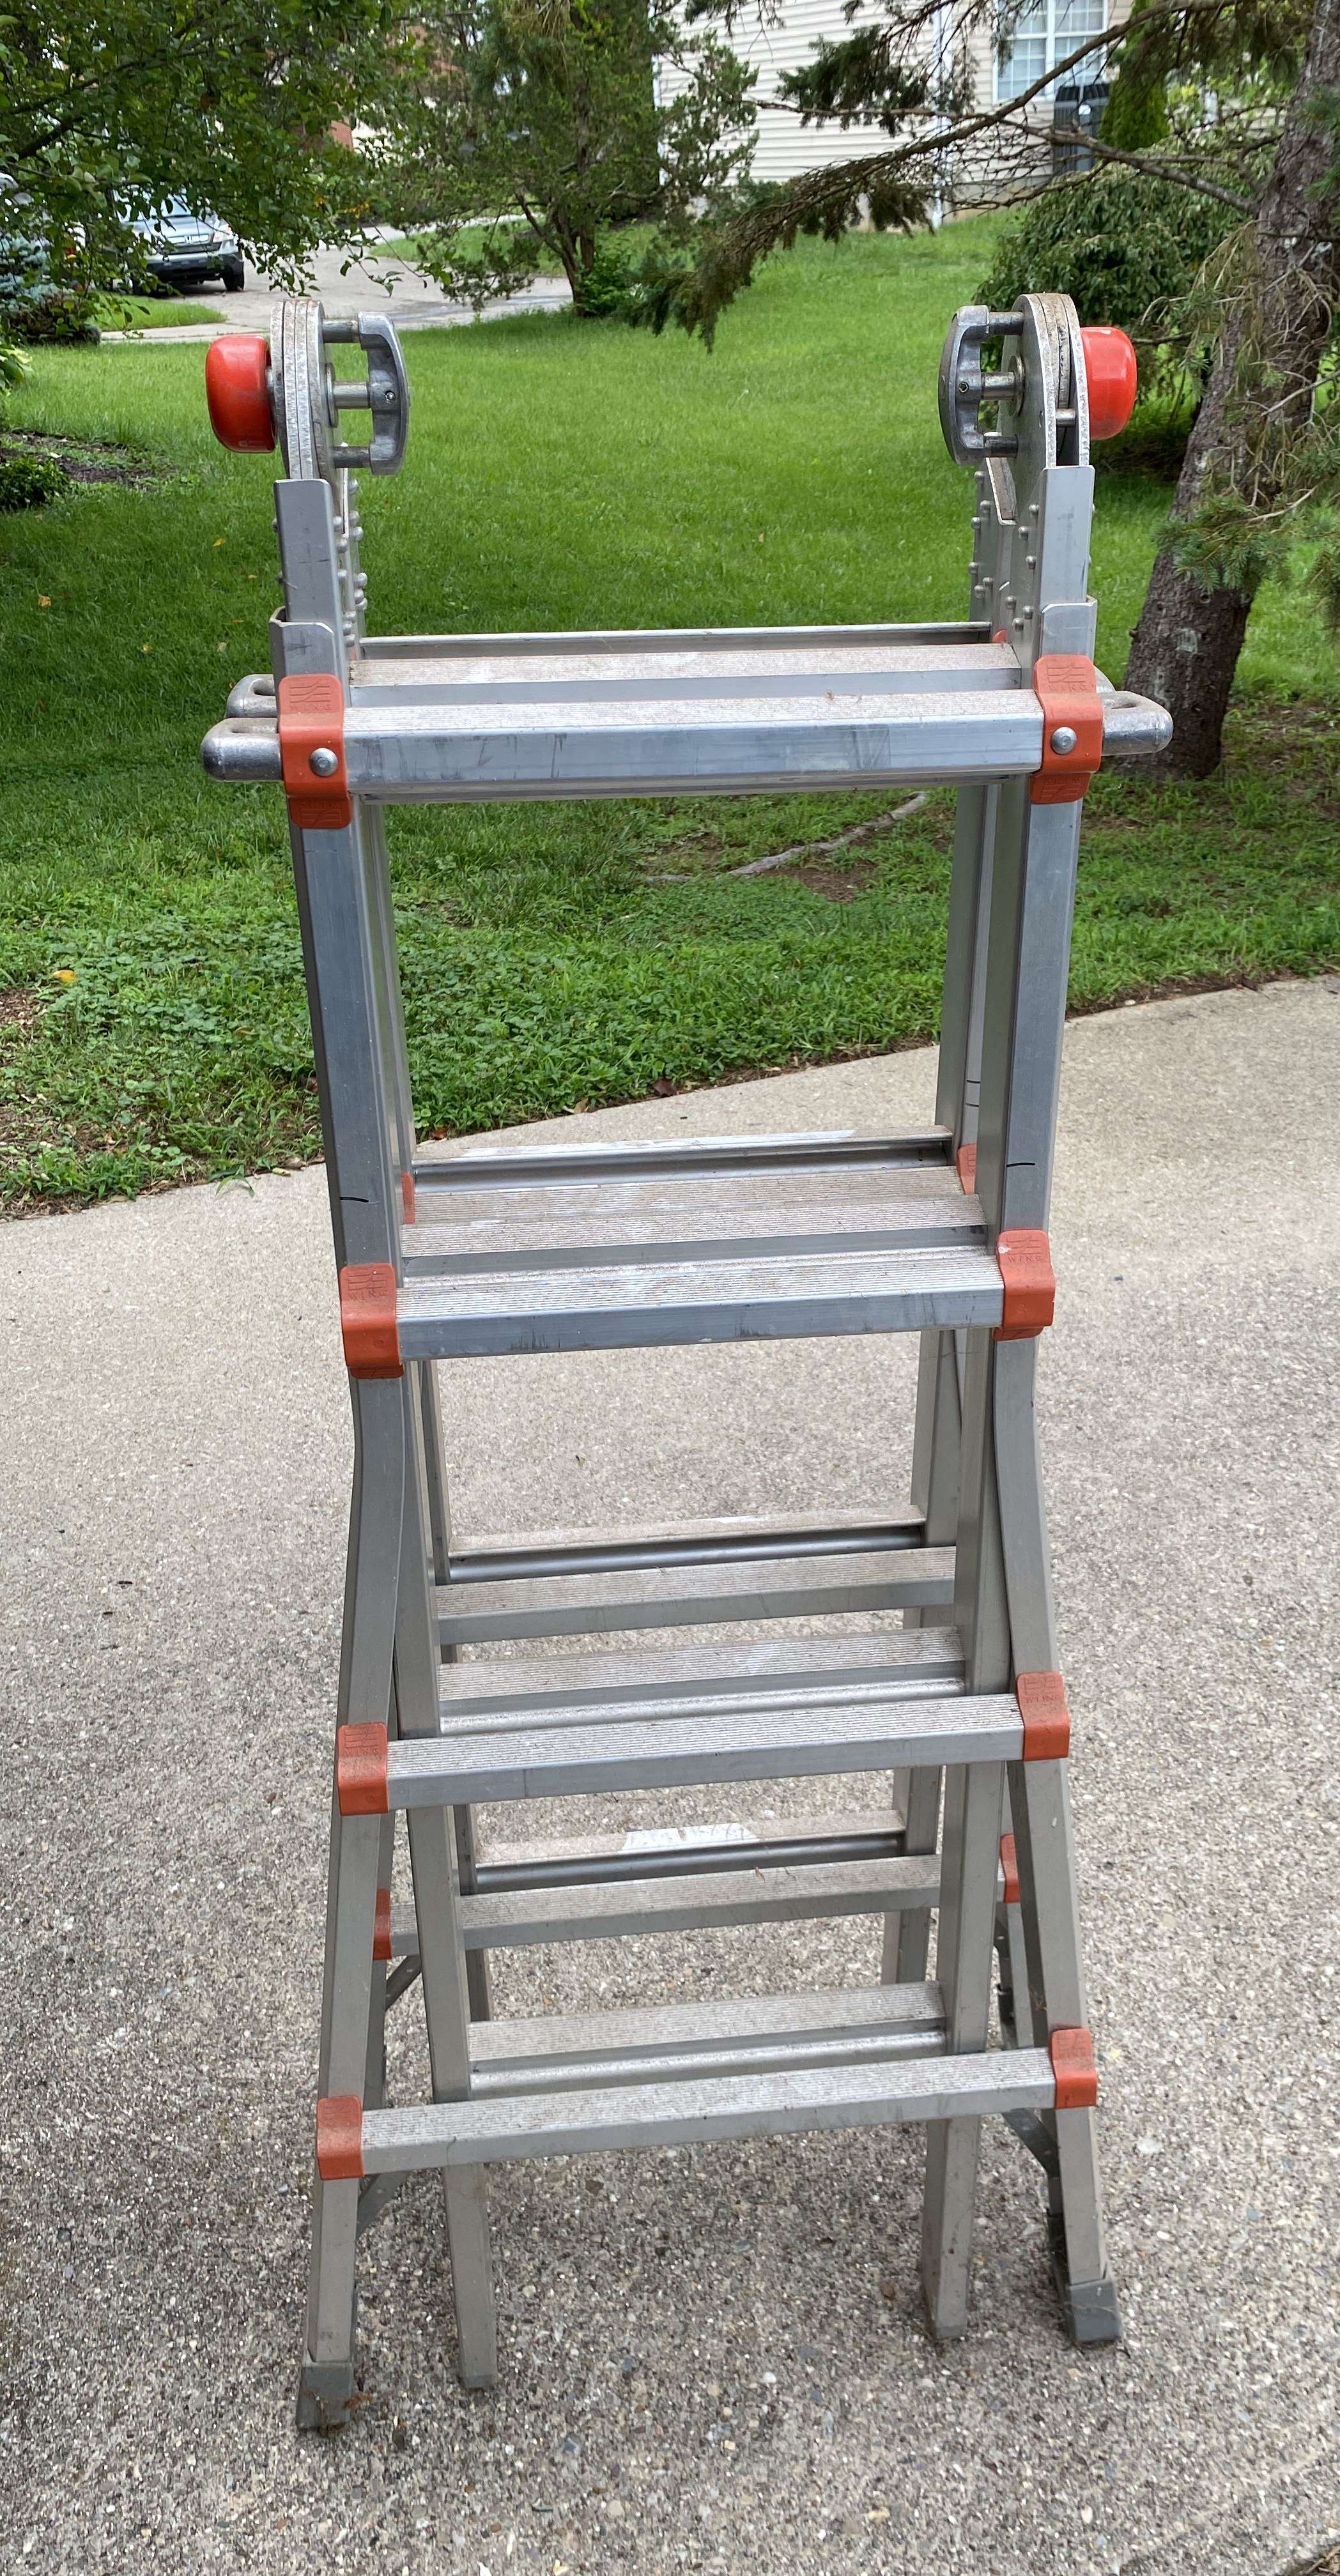 24 Foot Aluminum Extension Ladder  Cincinnati Colors - Cincinnati Color  Company